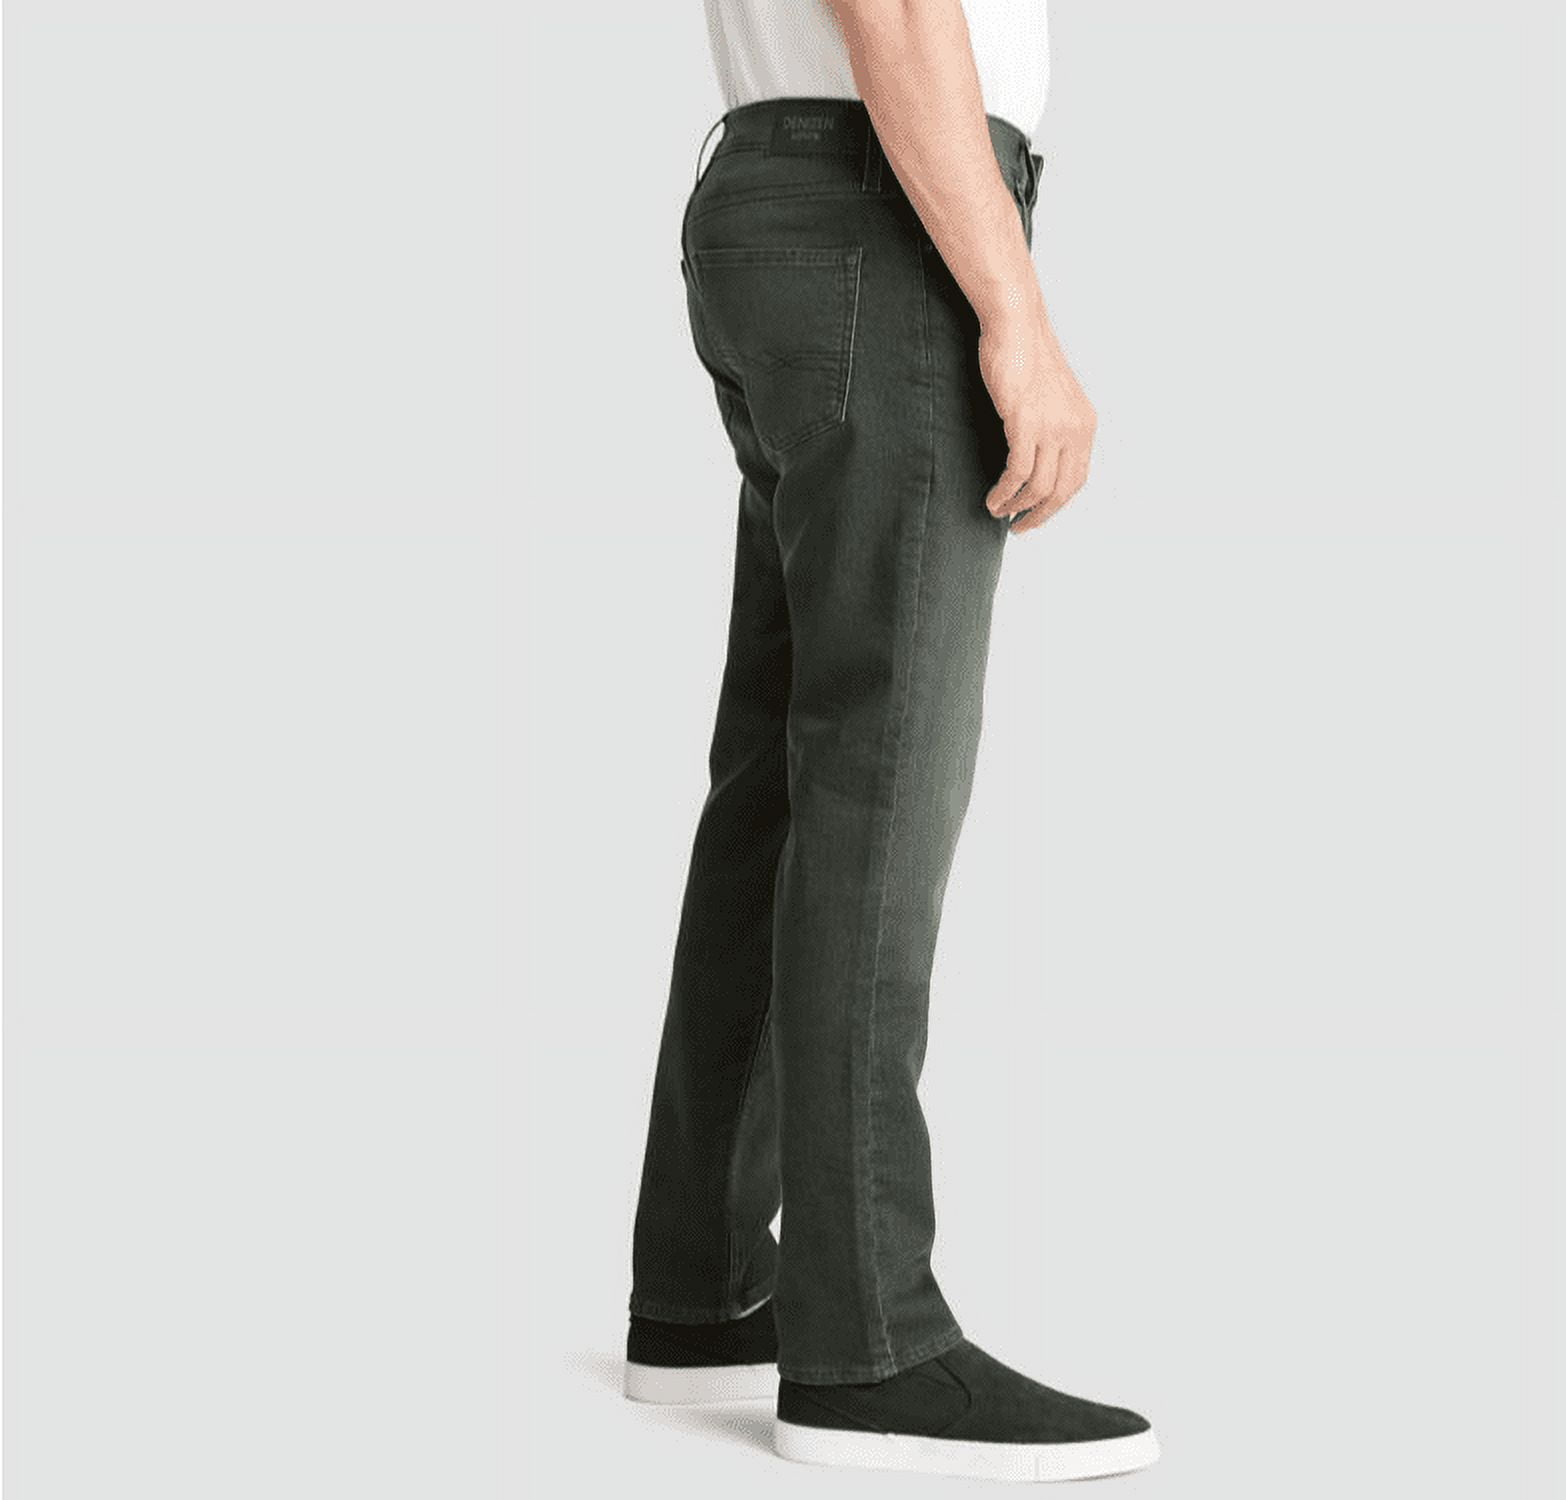 DENIZEN from Levi's Men's 216 Slim Fit Knit Jeans - Olive Green - 31x32